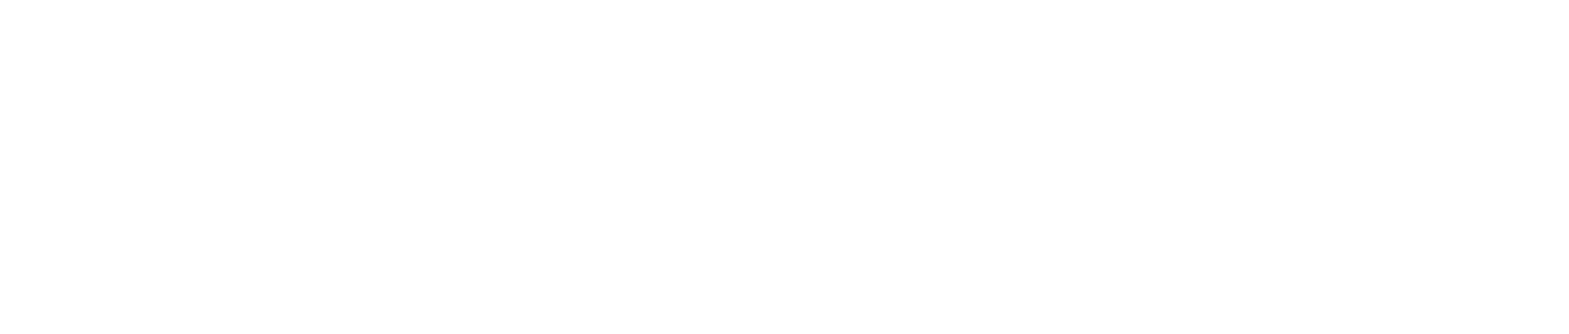 Pilbara Minerals logo grand pour les fonds sombres (PNG transparent)